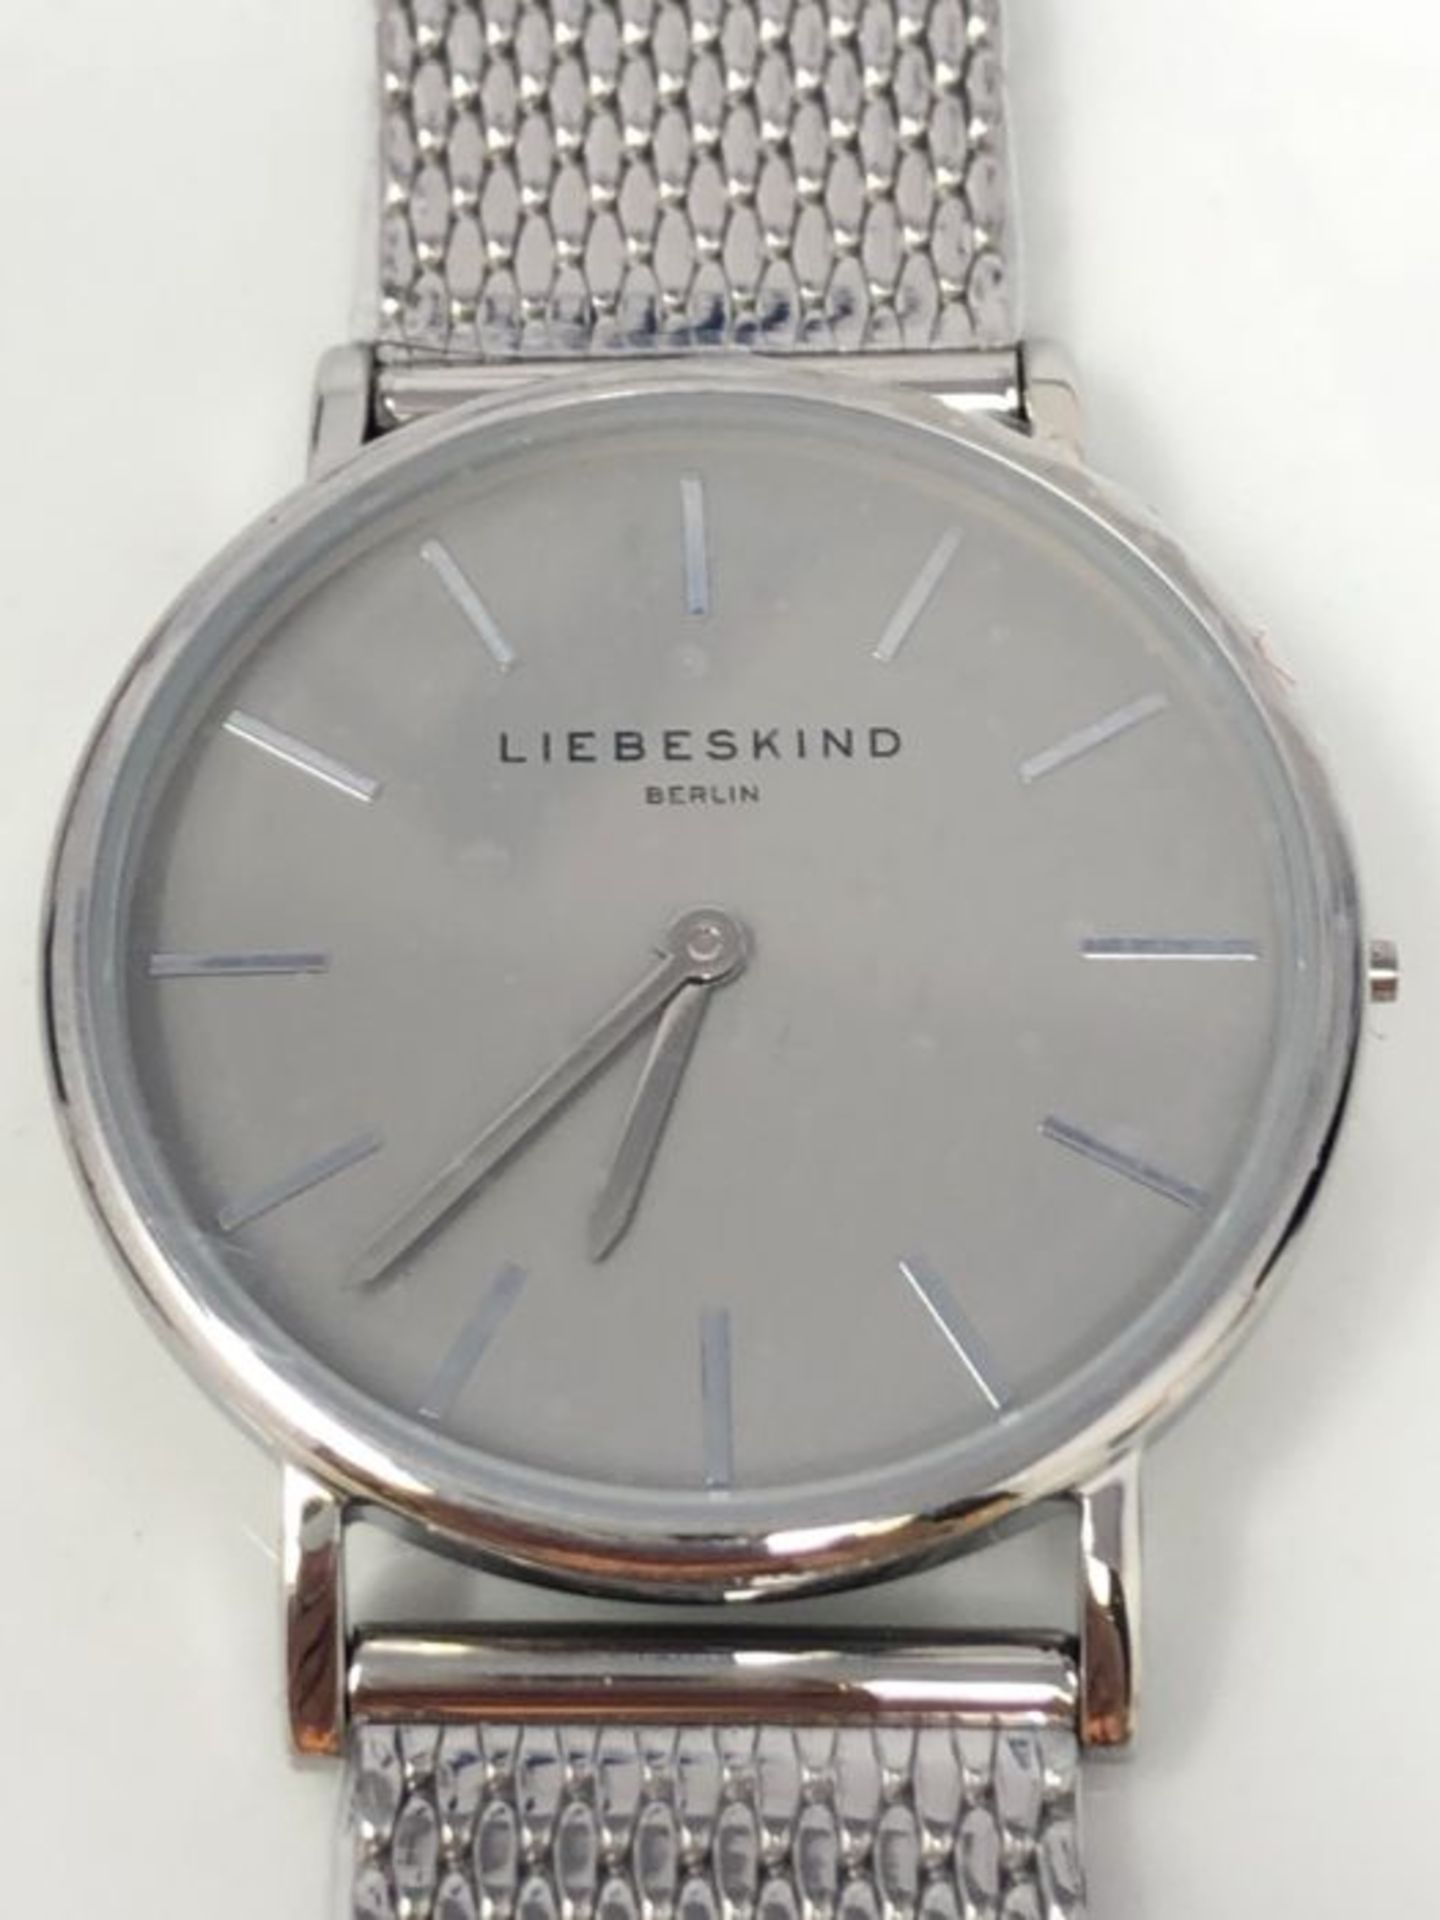 RRP £67.00 Liebeskind Berlin Damen Analog Quarz Uhr mit Edelstahl Armband LT-0169-MQ - Image 6 of 6